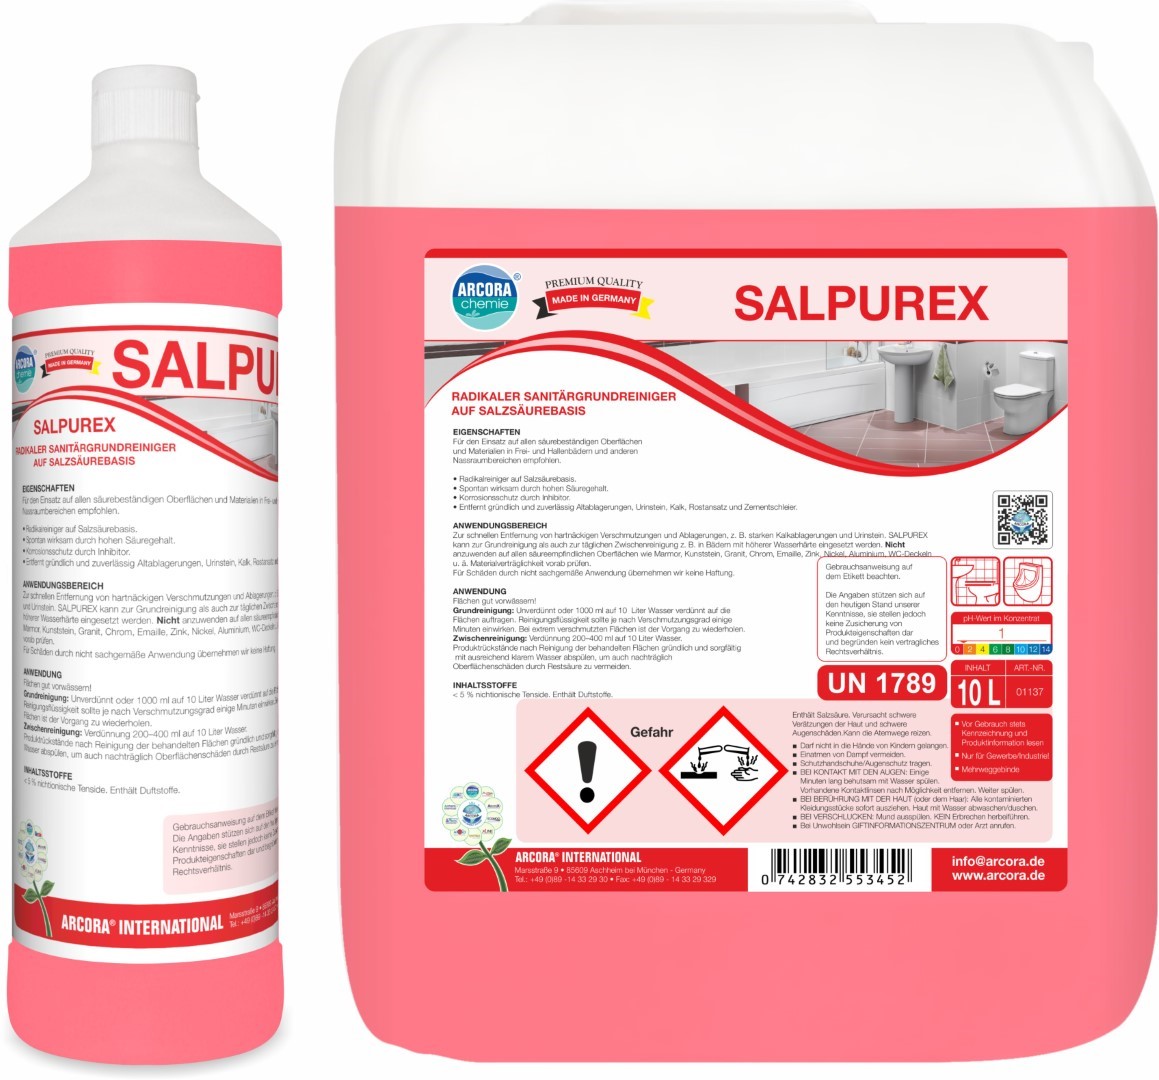 Salpurex | Sanitärgrundreiniger | Salzsäurebasis | 10 Liter Kanister